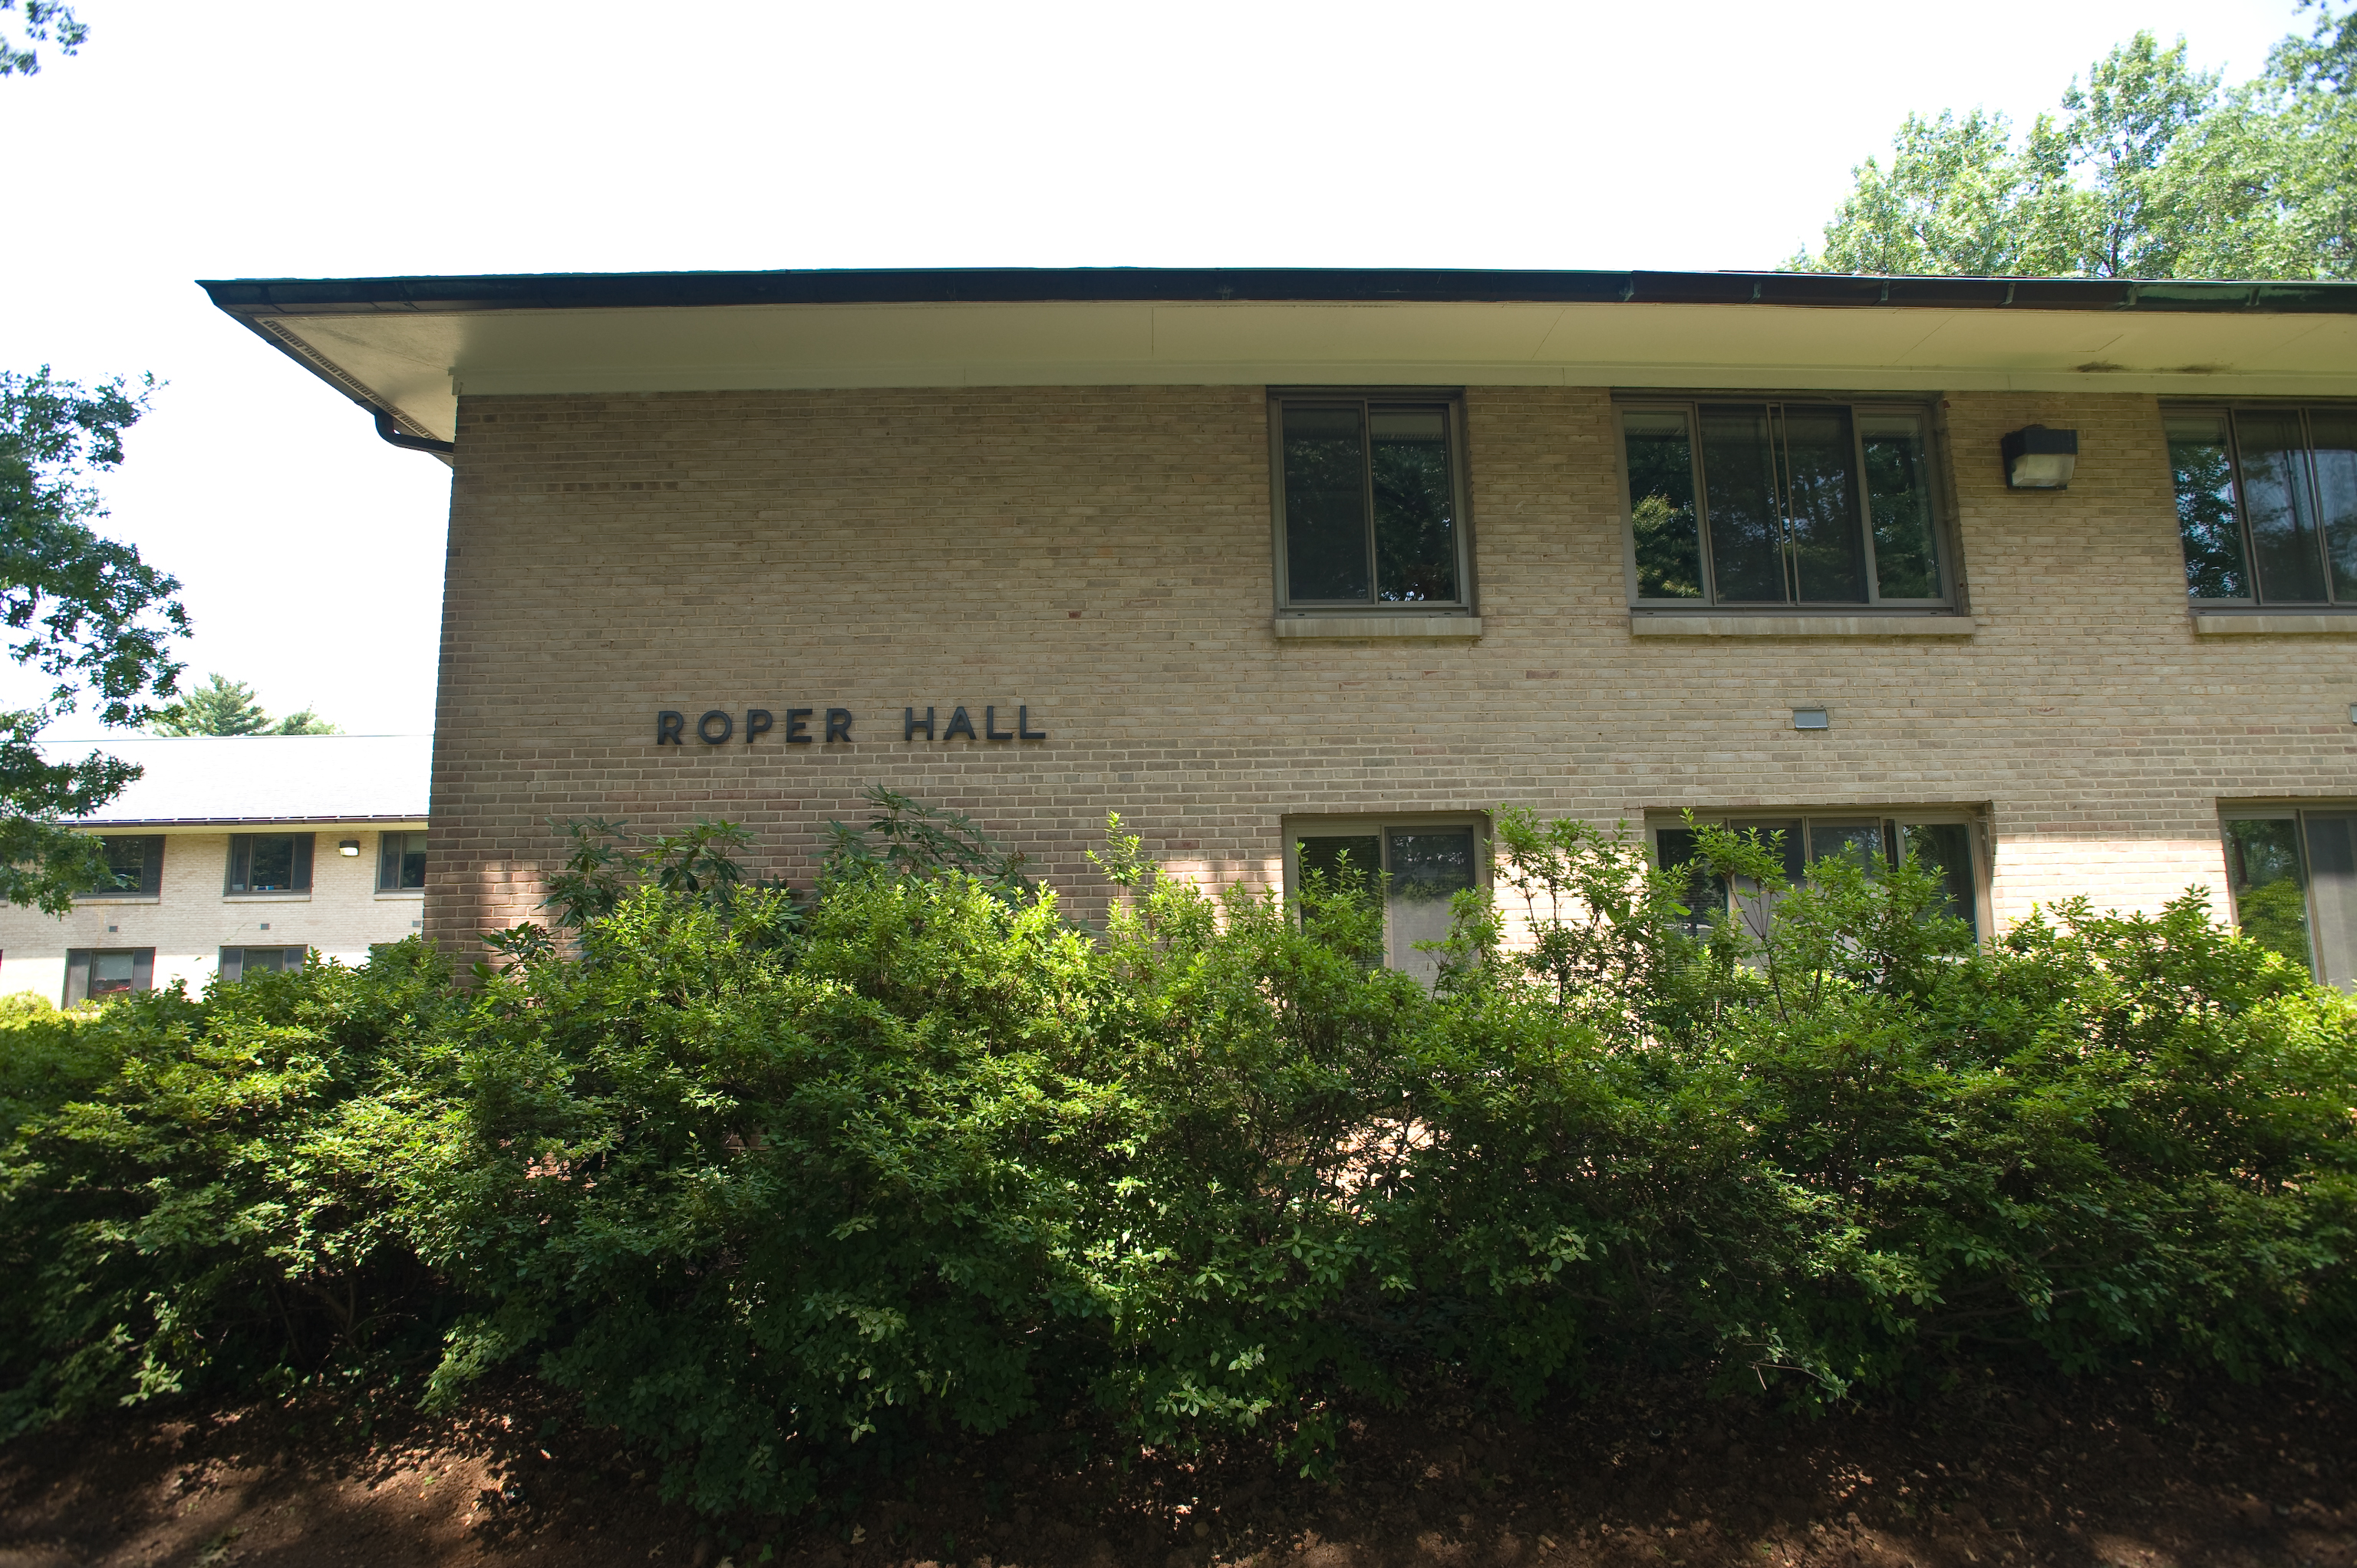 Roper Hall